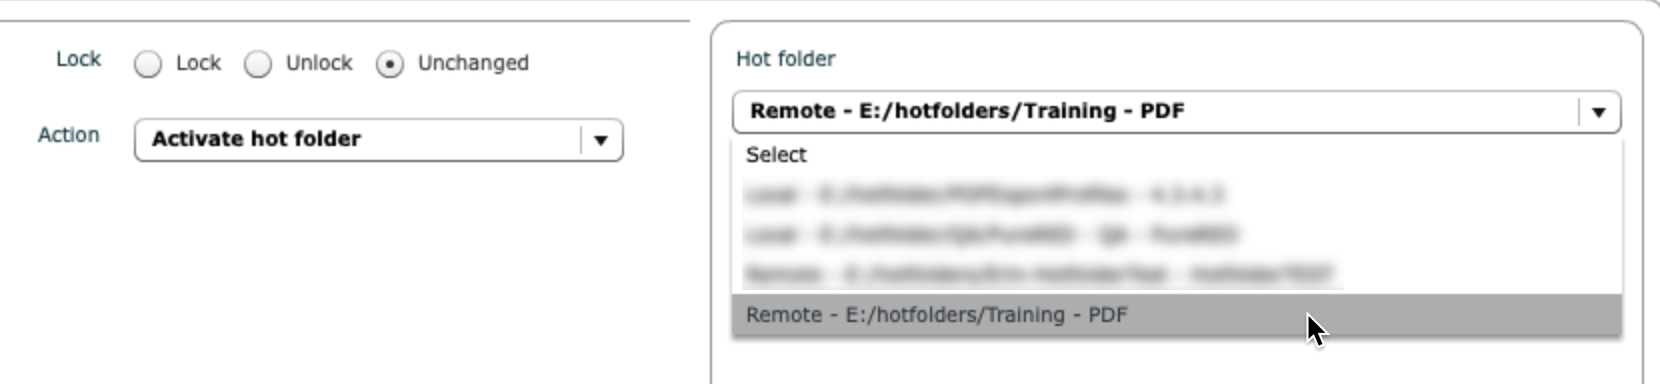 Activate Hot Folder